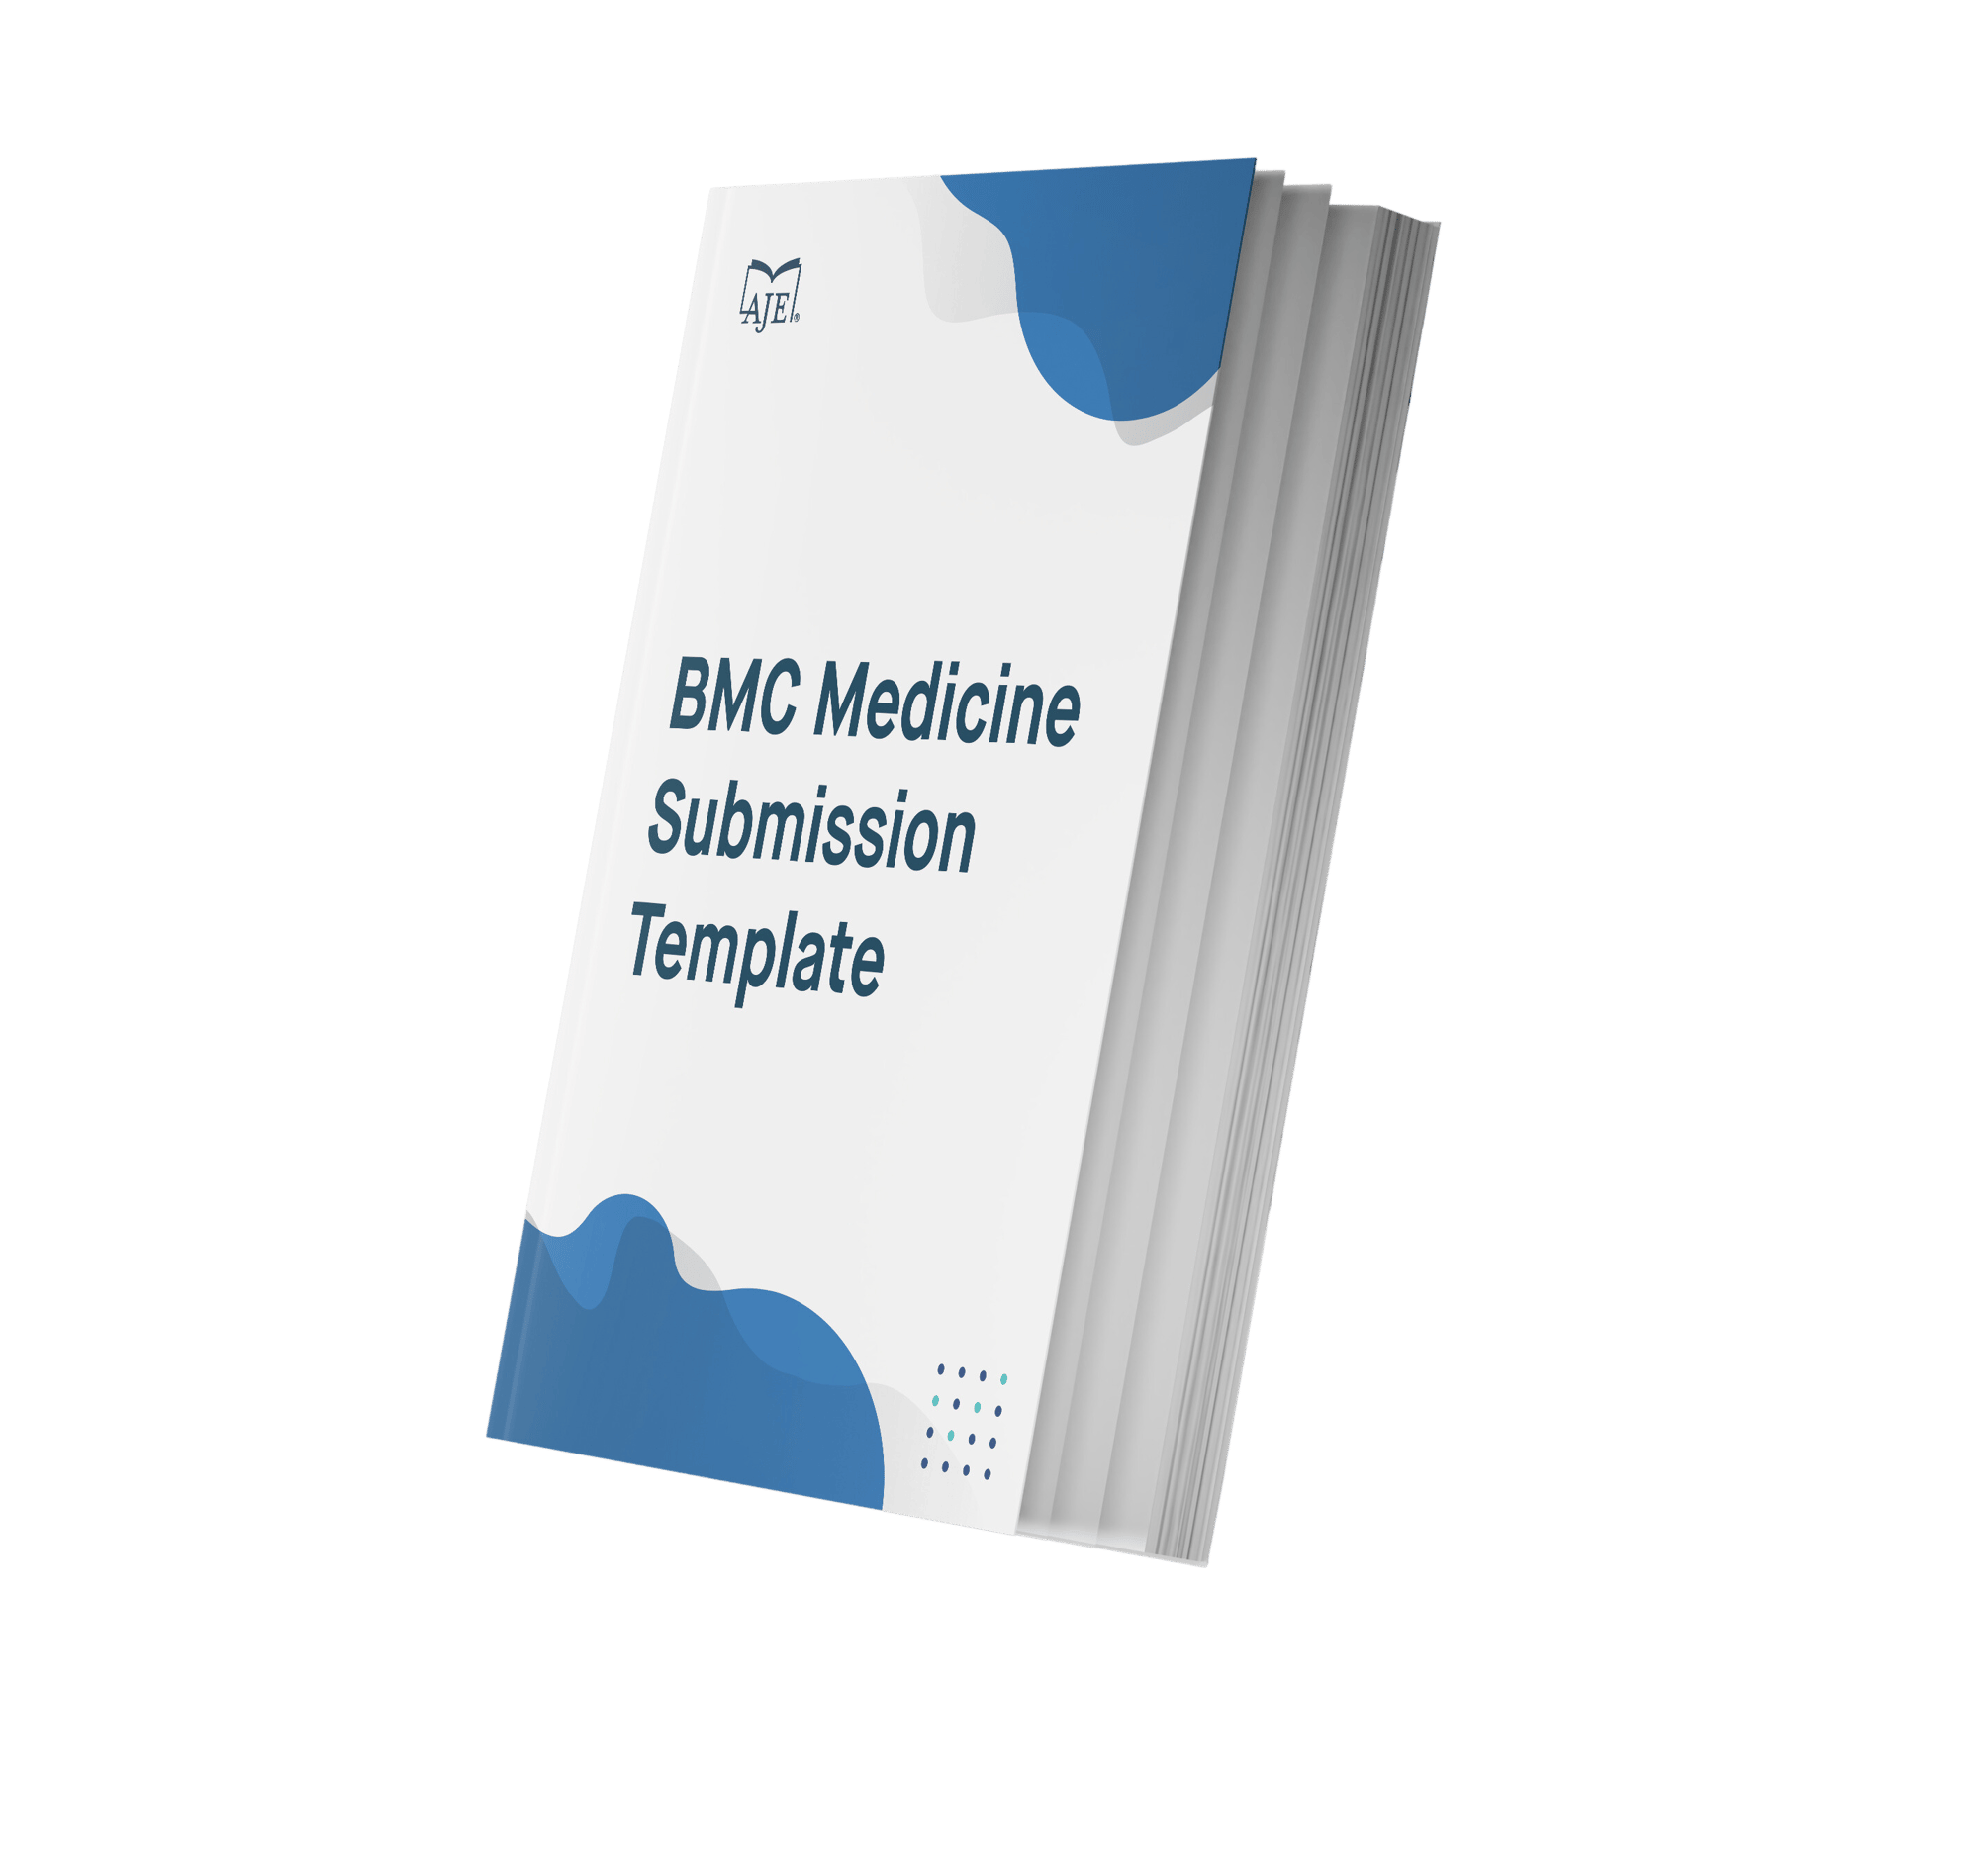 bmc-medicine-submission-template-resource